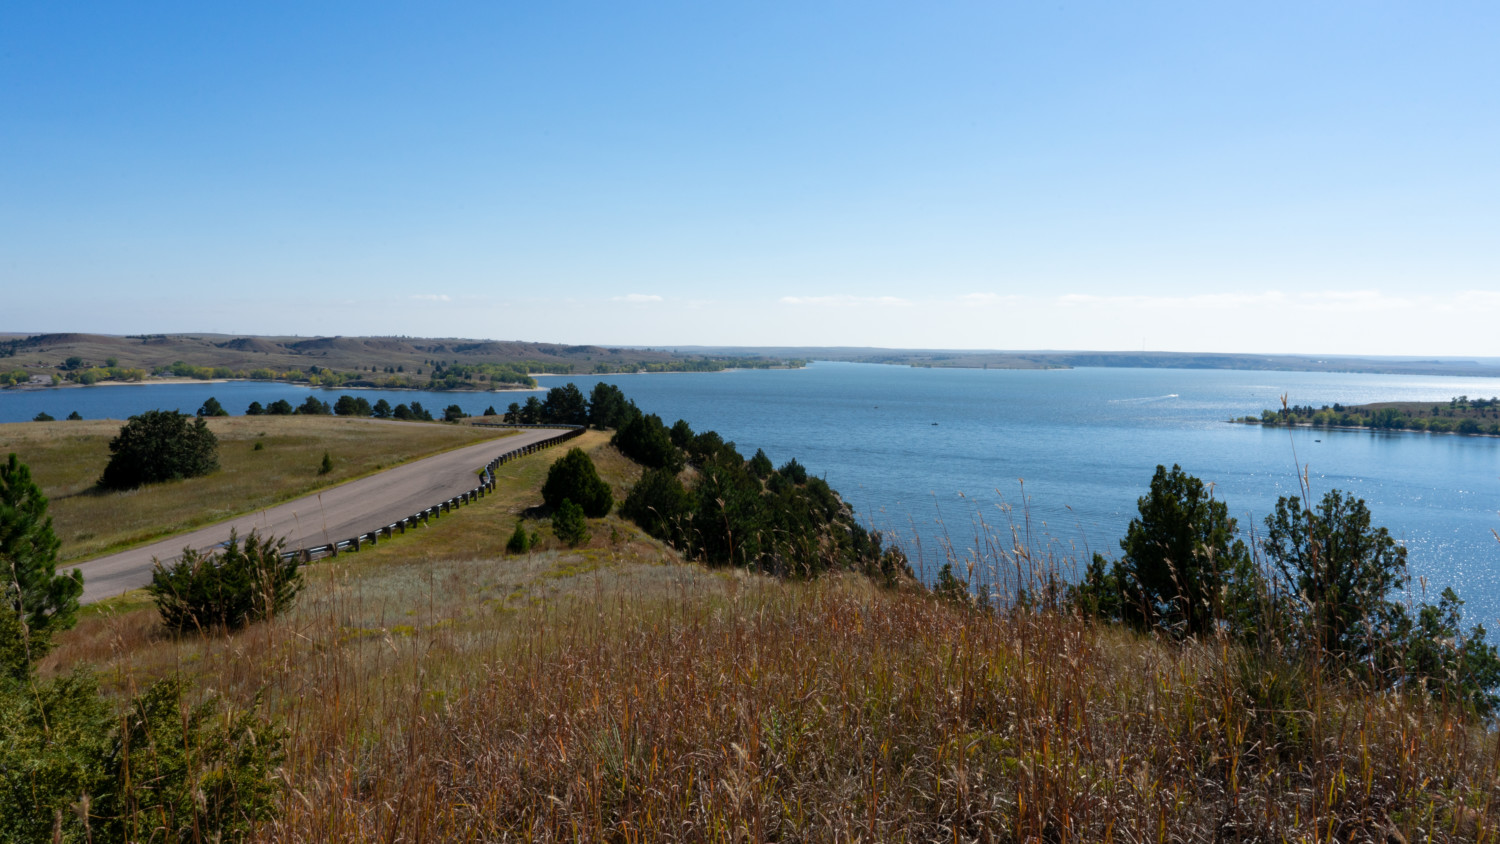 View overlooking the pet-friendly Angostura Reservoir in South Dakota's Black Hills